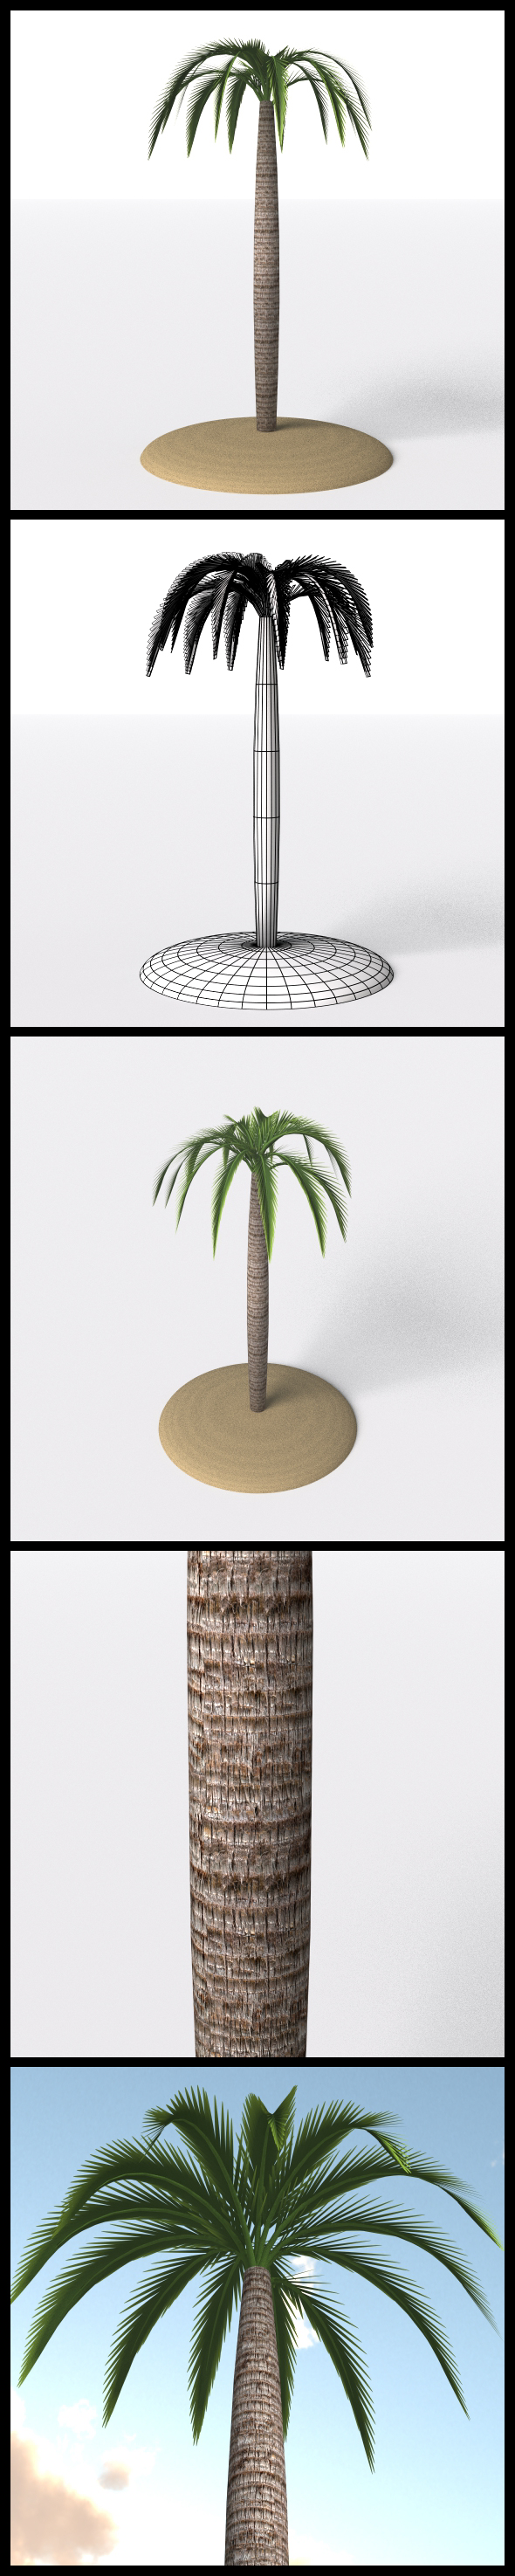 Palm Tree - 3Docean 17144191